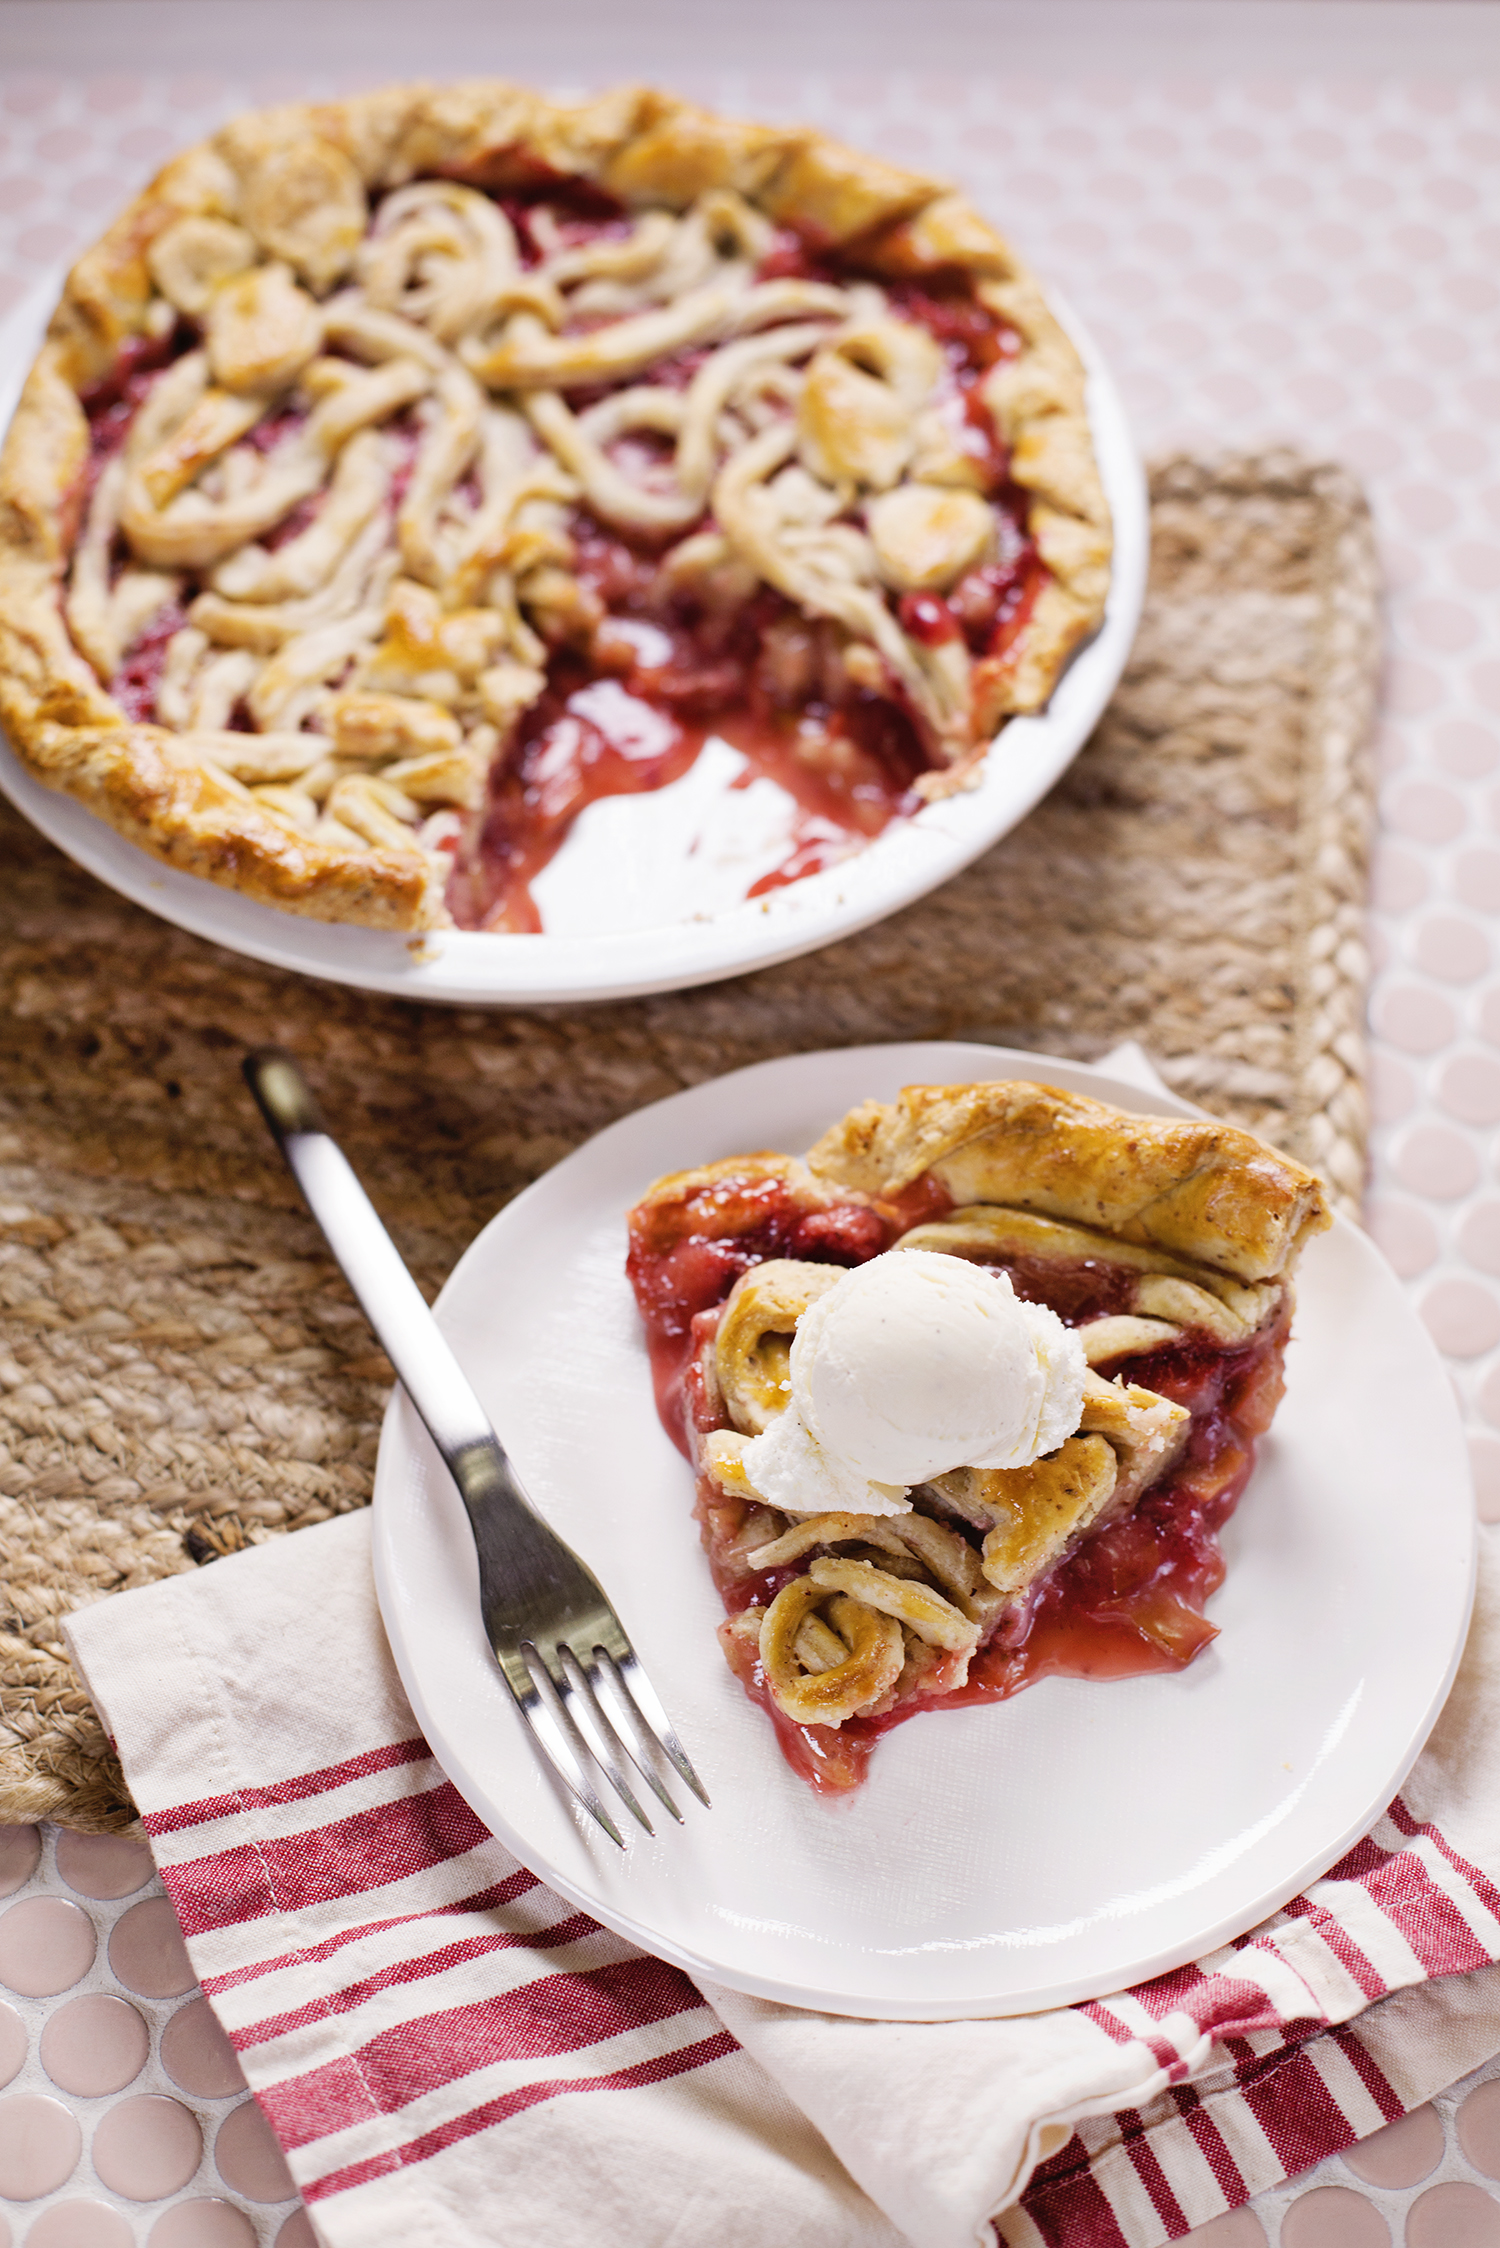 Rhubarb strawberry and almond pie (via abeautifulmess.com)